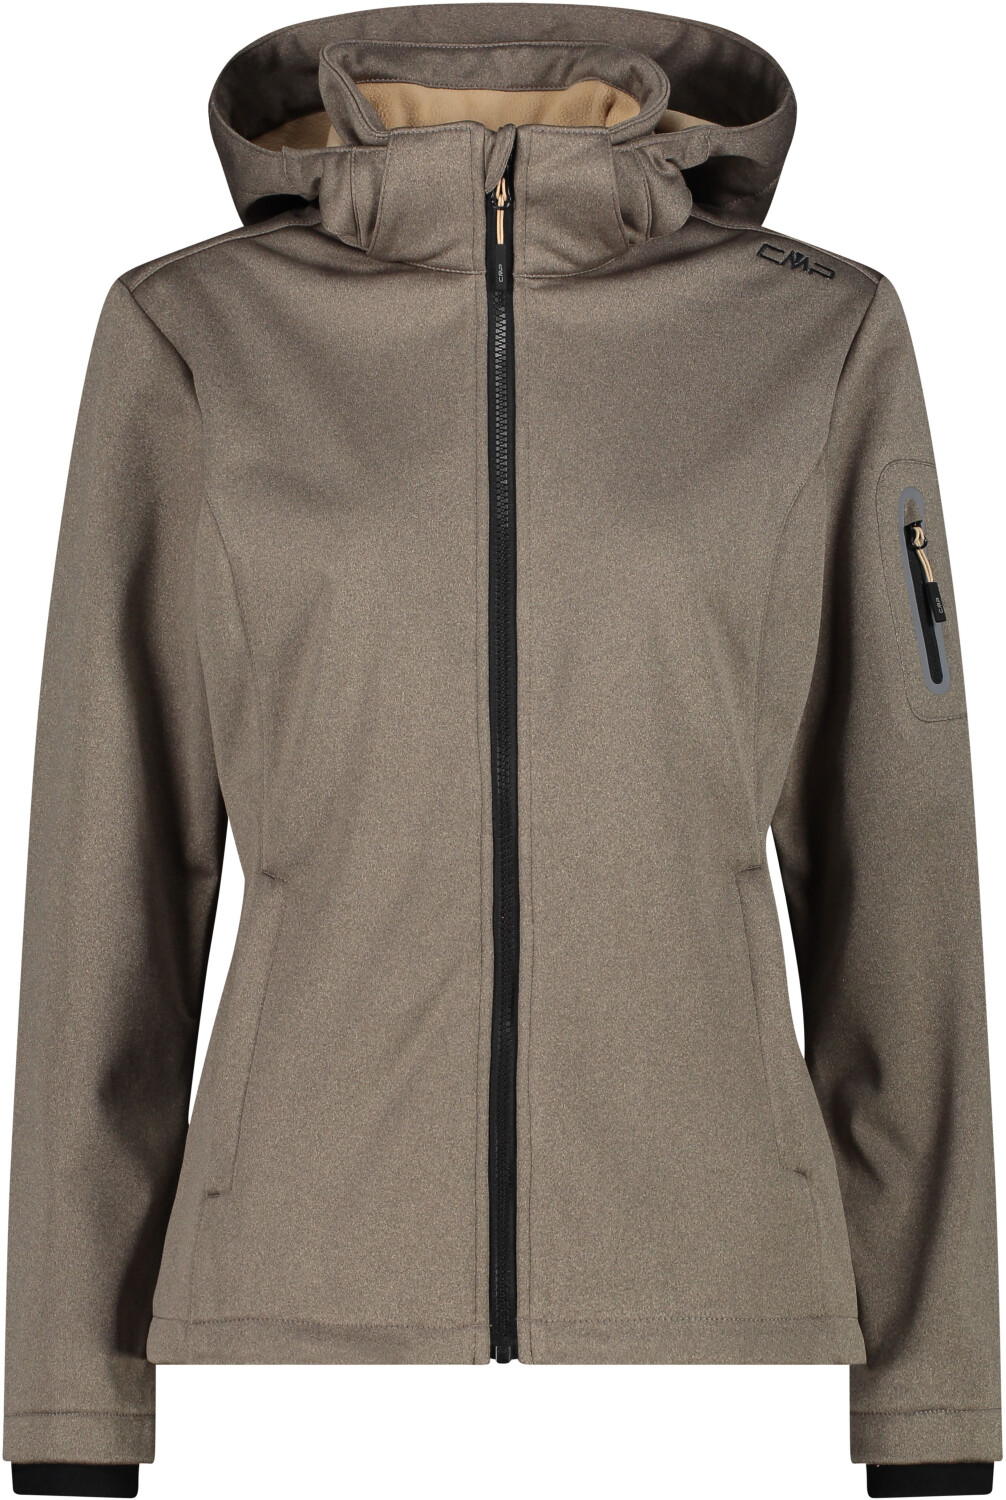 CMP Women's Mélange Softshell Jacket (39A5006M) sesamo mel./nero ab € 53,91  | Preisvergleich bei